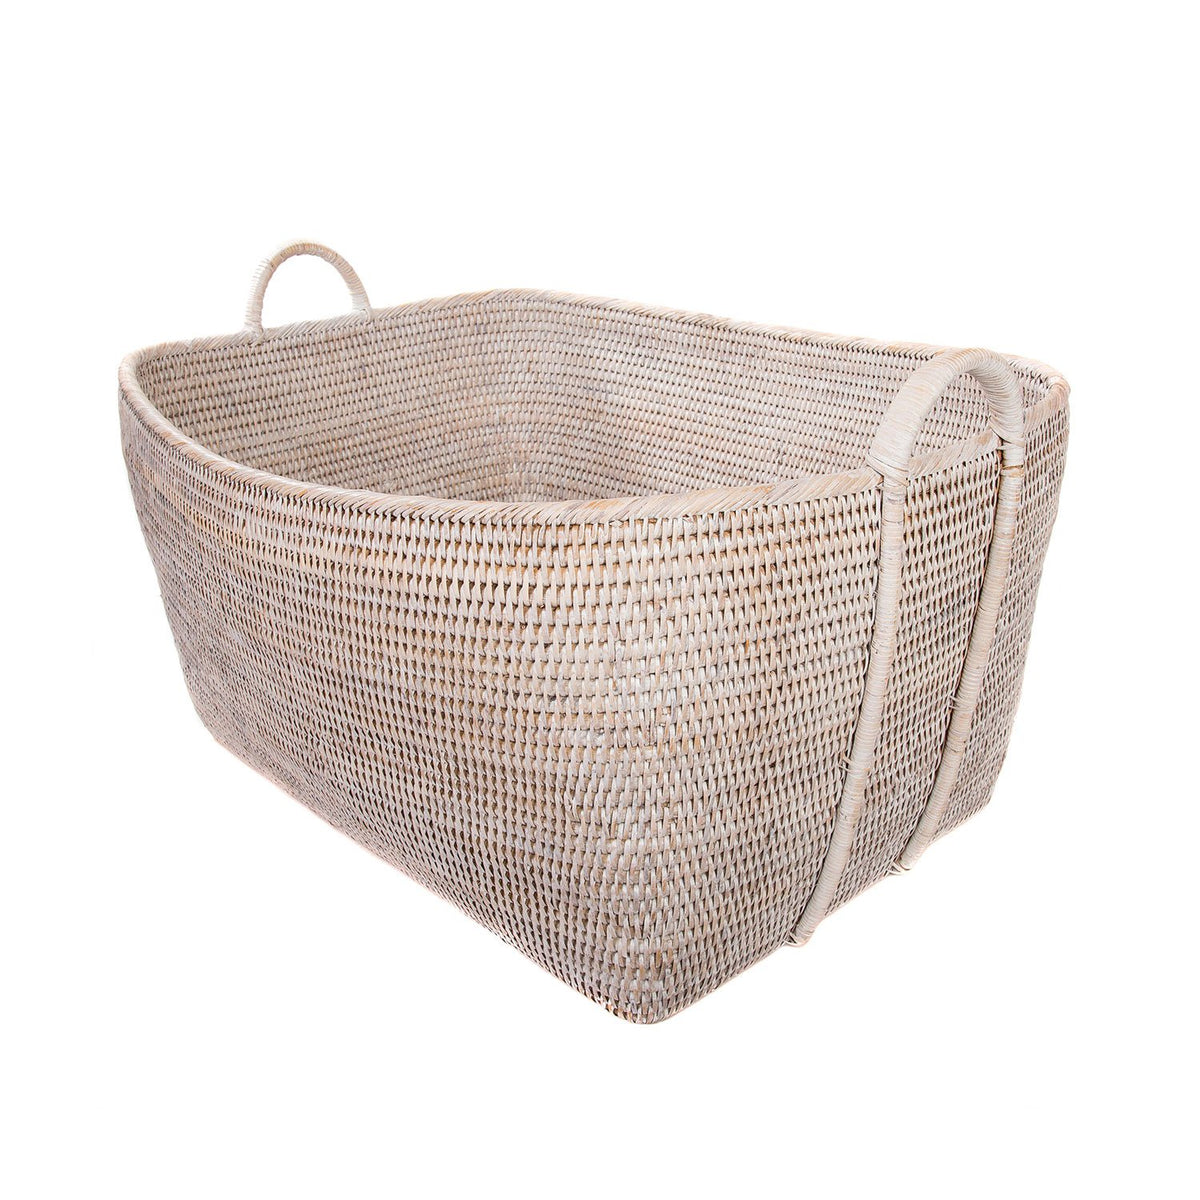 Woven Basket with Hoop Handles in Whitewash